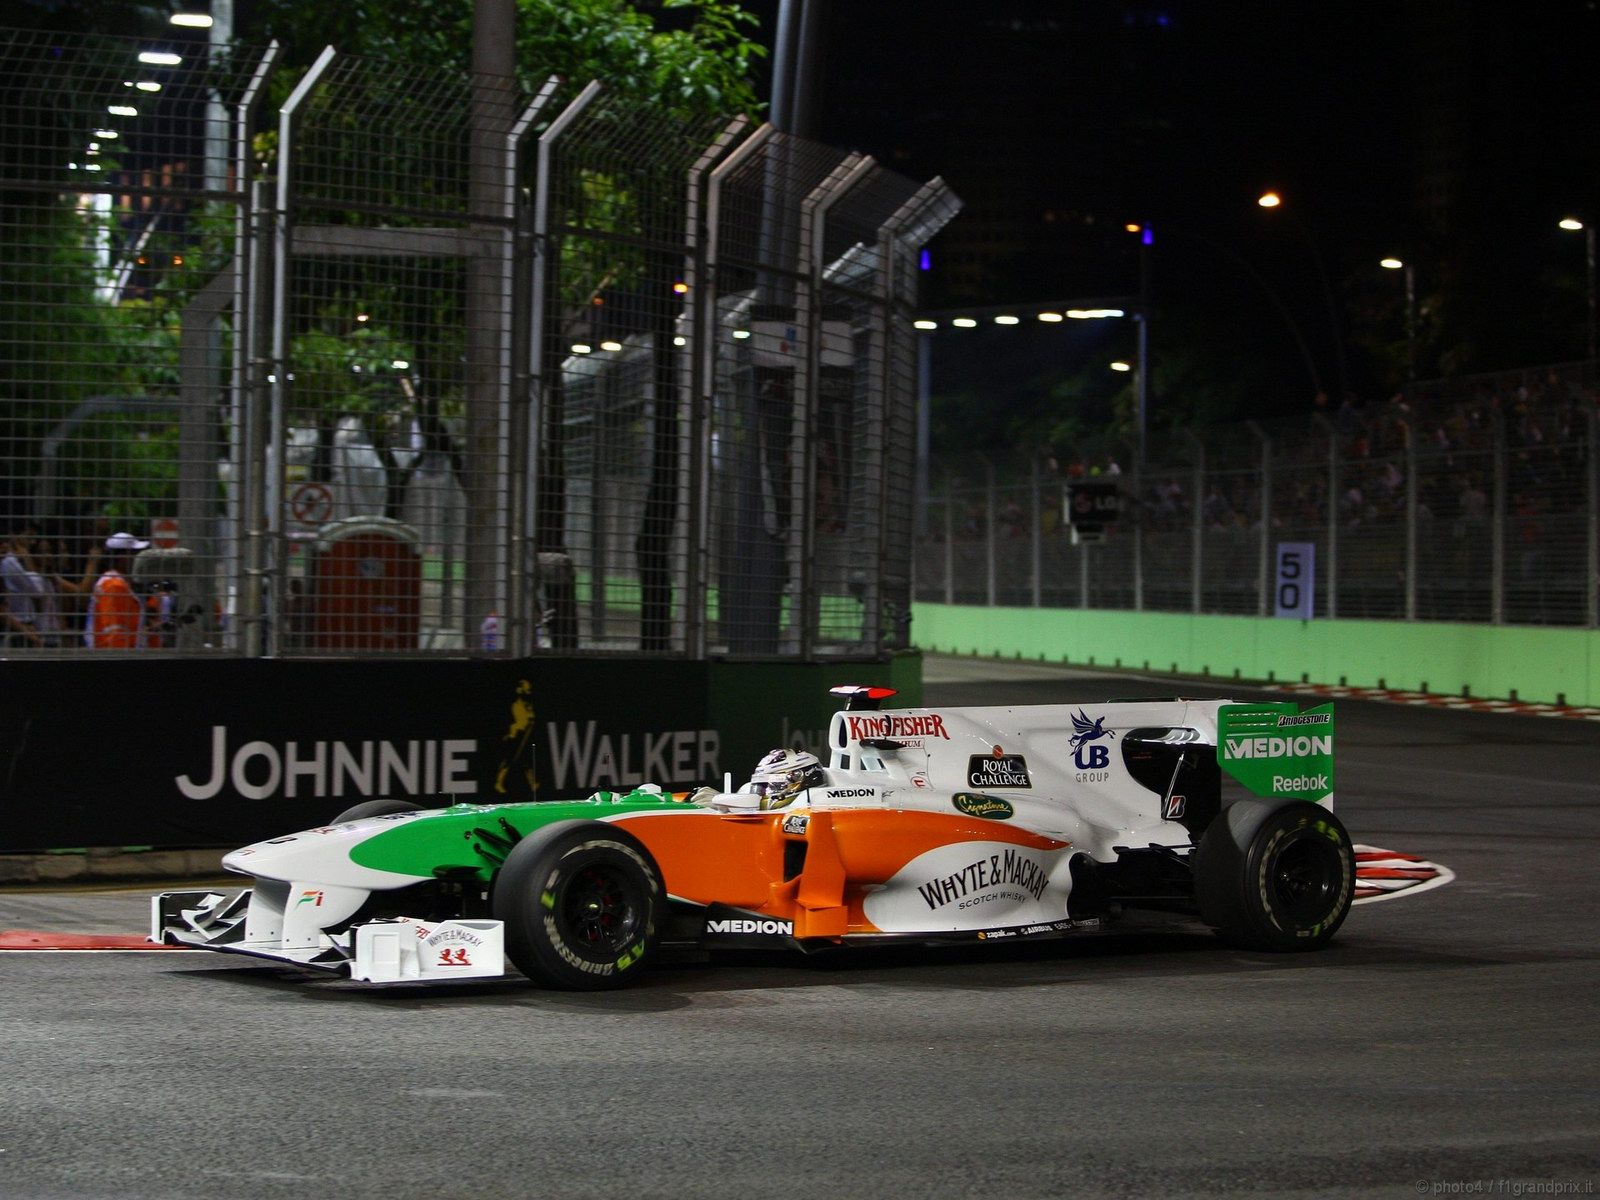 pojazdy - formula1 - gp_singapore_wallpapers_000059